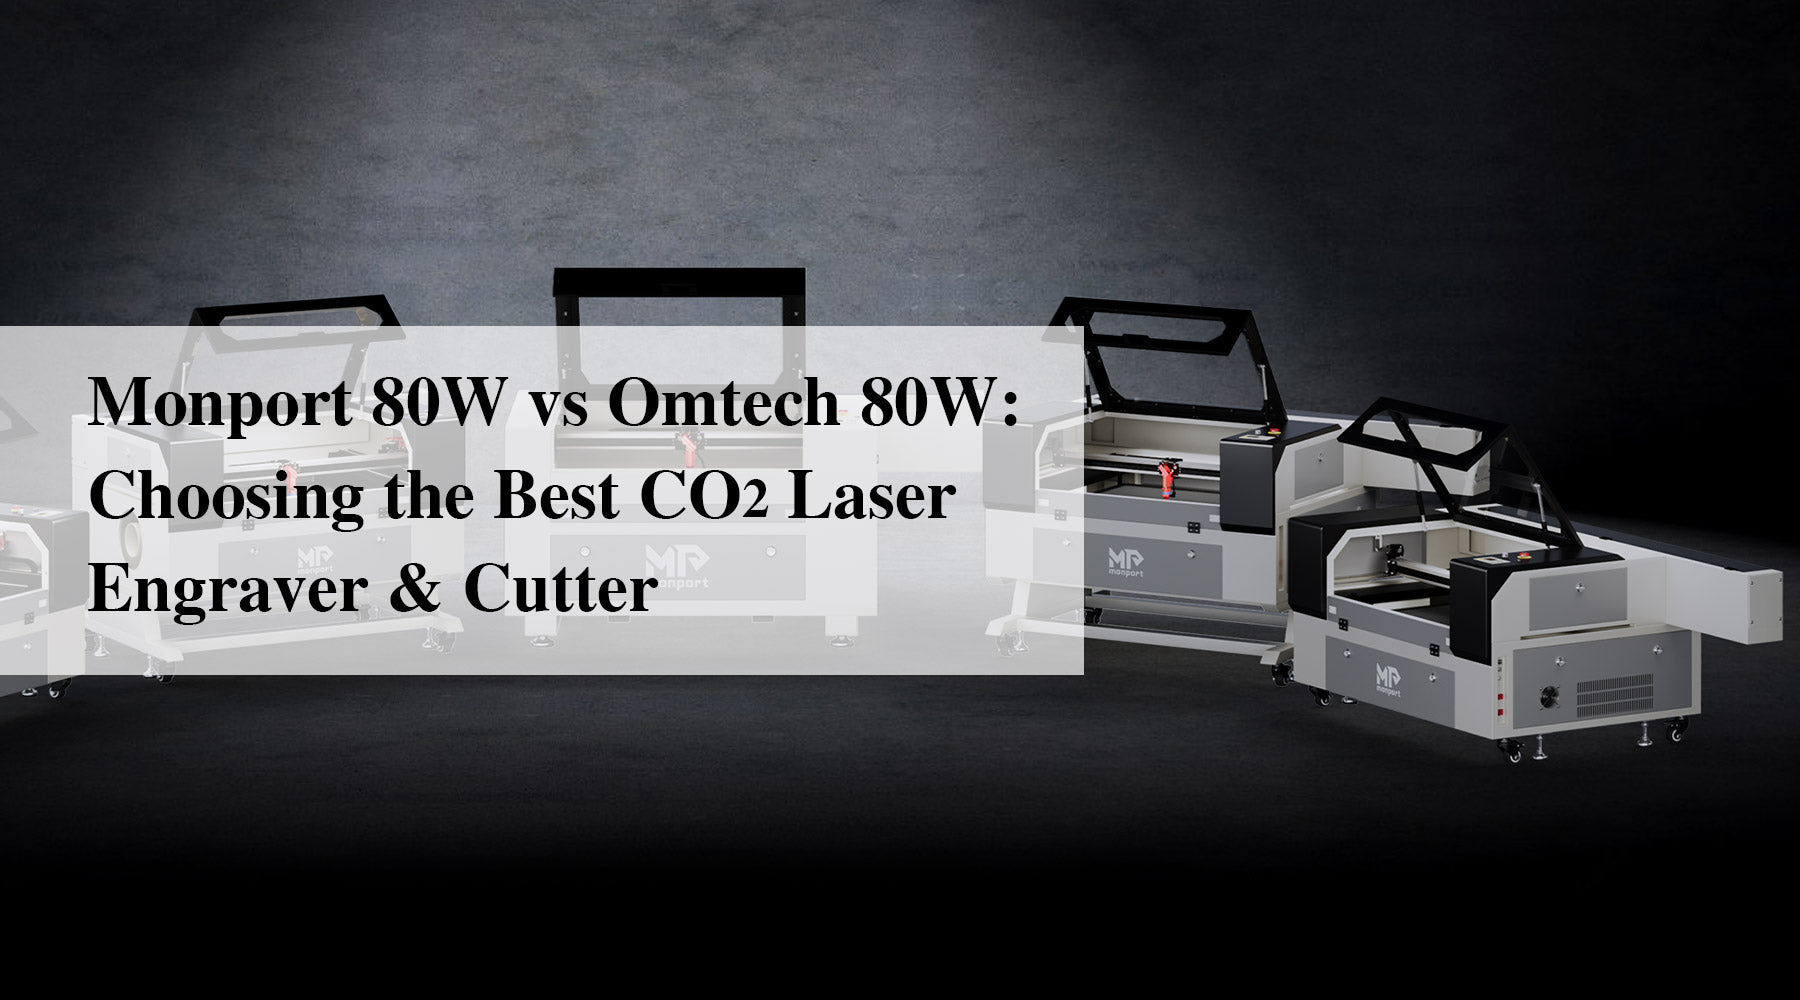 Monport 80W vs Omtech 80W: Choosing the Best CO2 Laser Engraver & Cutter